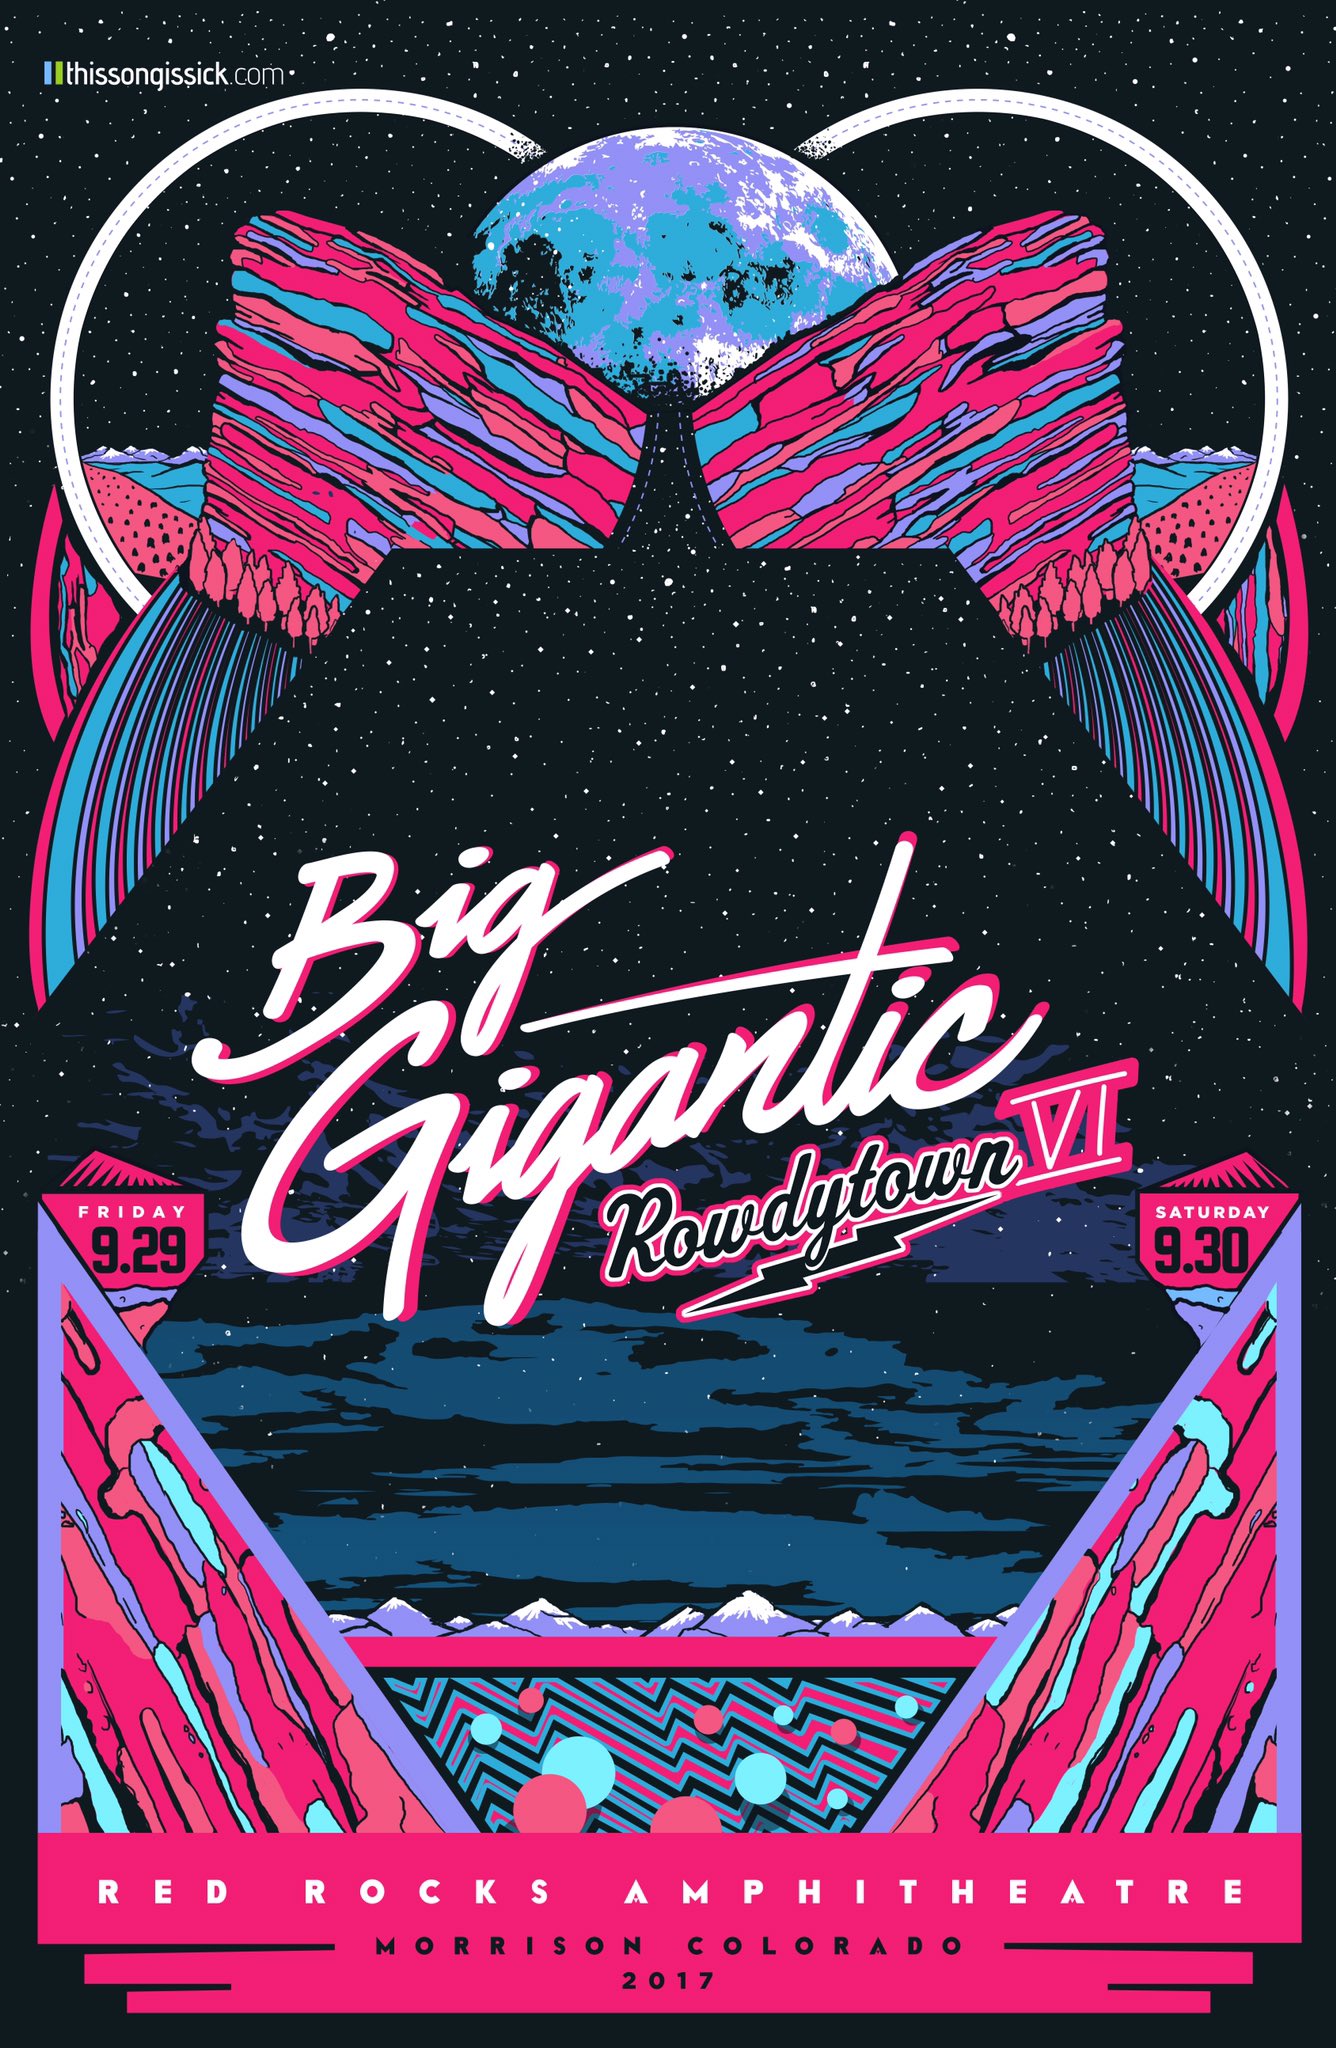 Big Gigantic Rowdytown VI poster. Photo by: ThisSongisSick.com / Red Rocks Amphitheatre